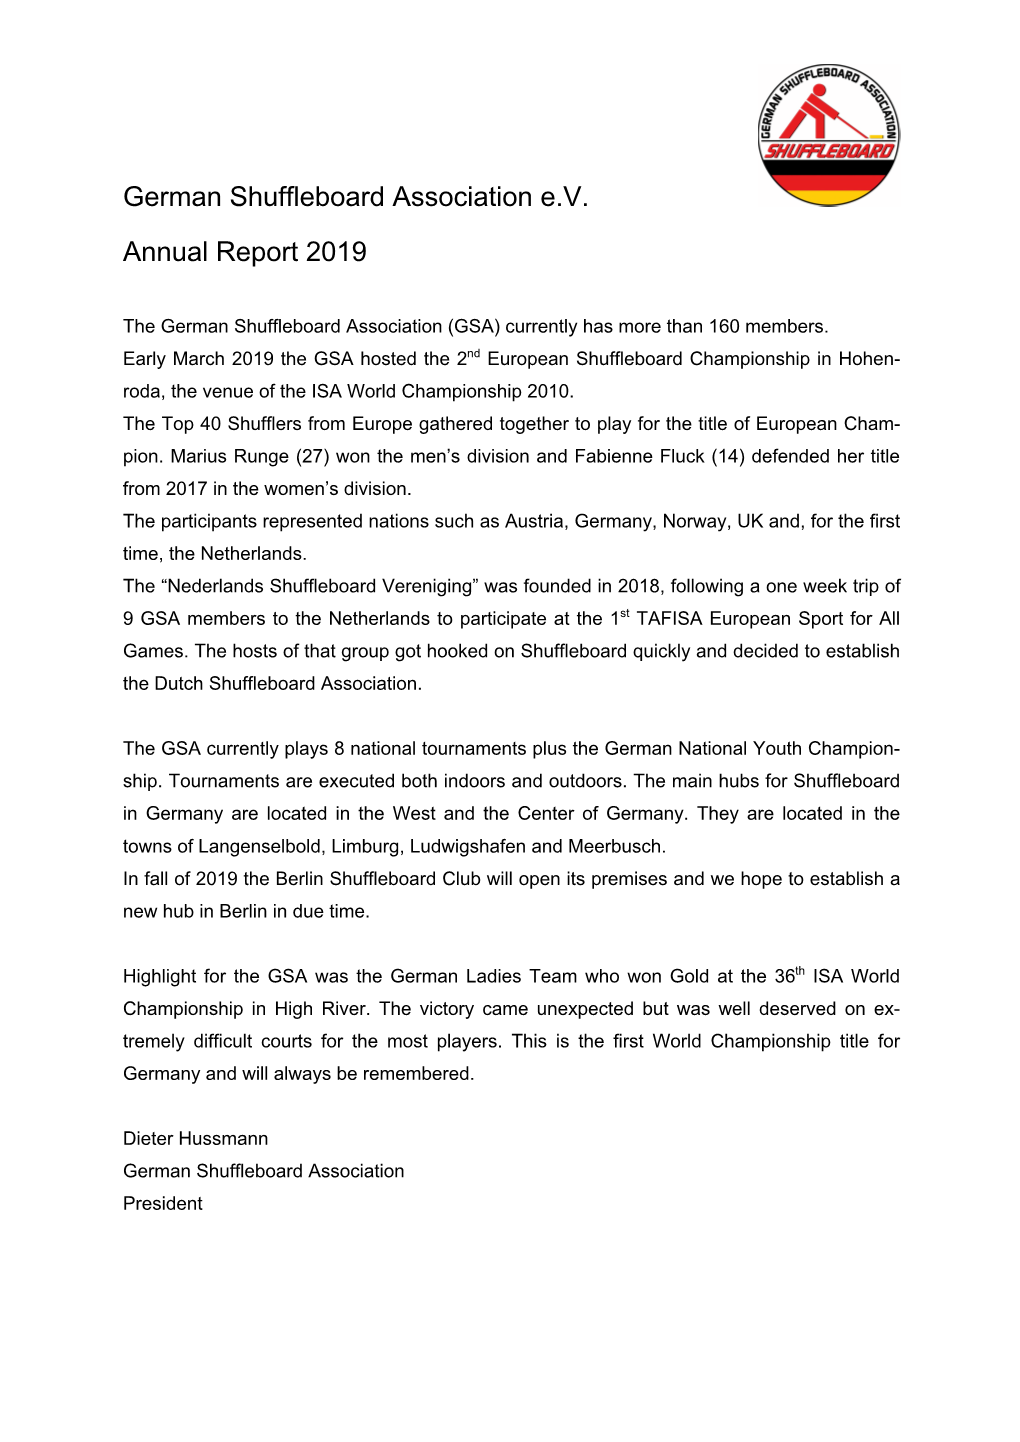 German Shuffleboard Association E.V. Annual Report 2019